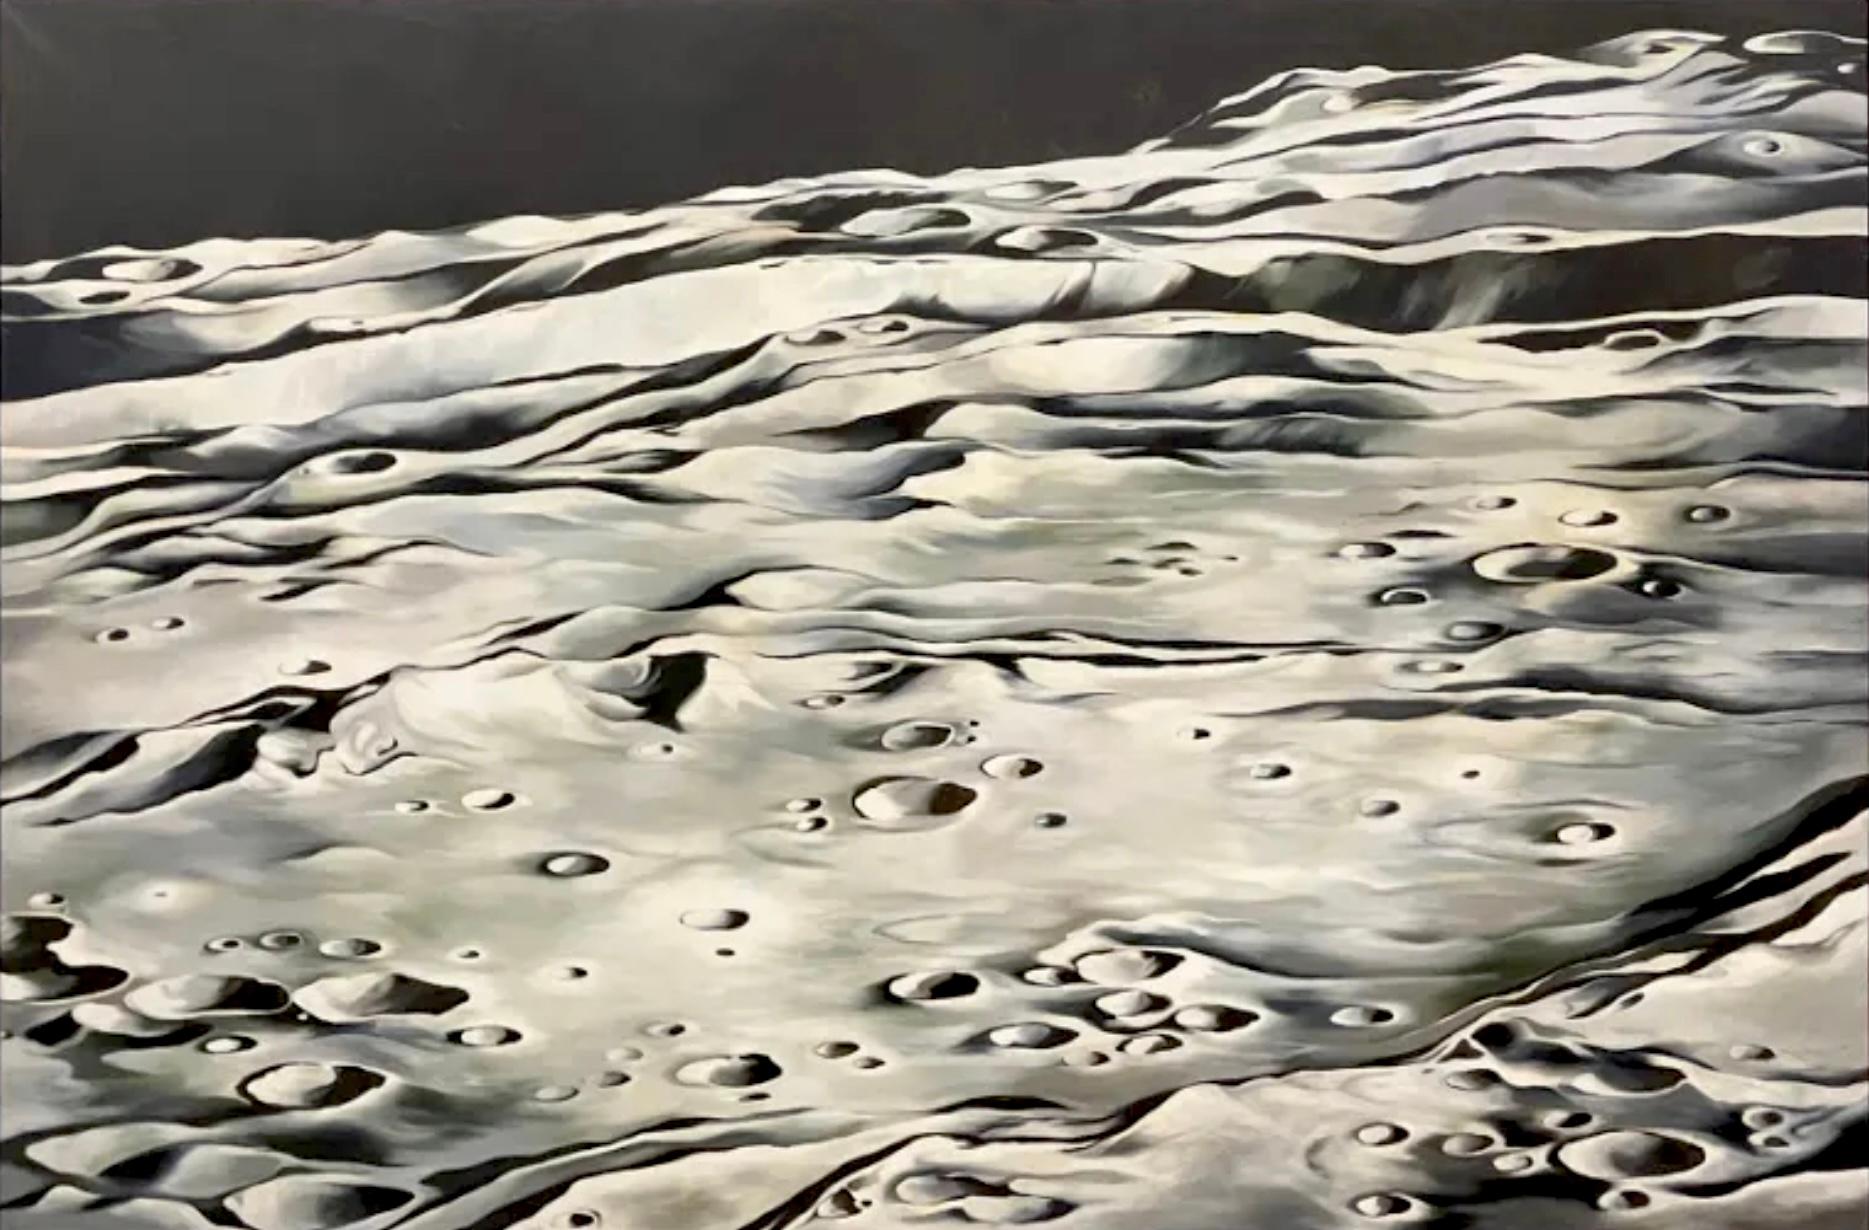 Moon Shot (NASA official commission—74 x 114 inches), Lowell Nesbitt